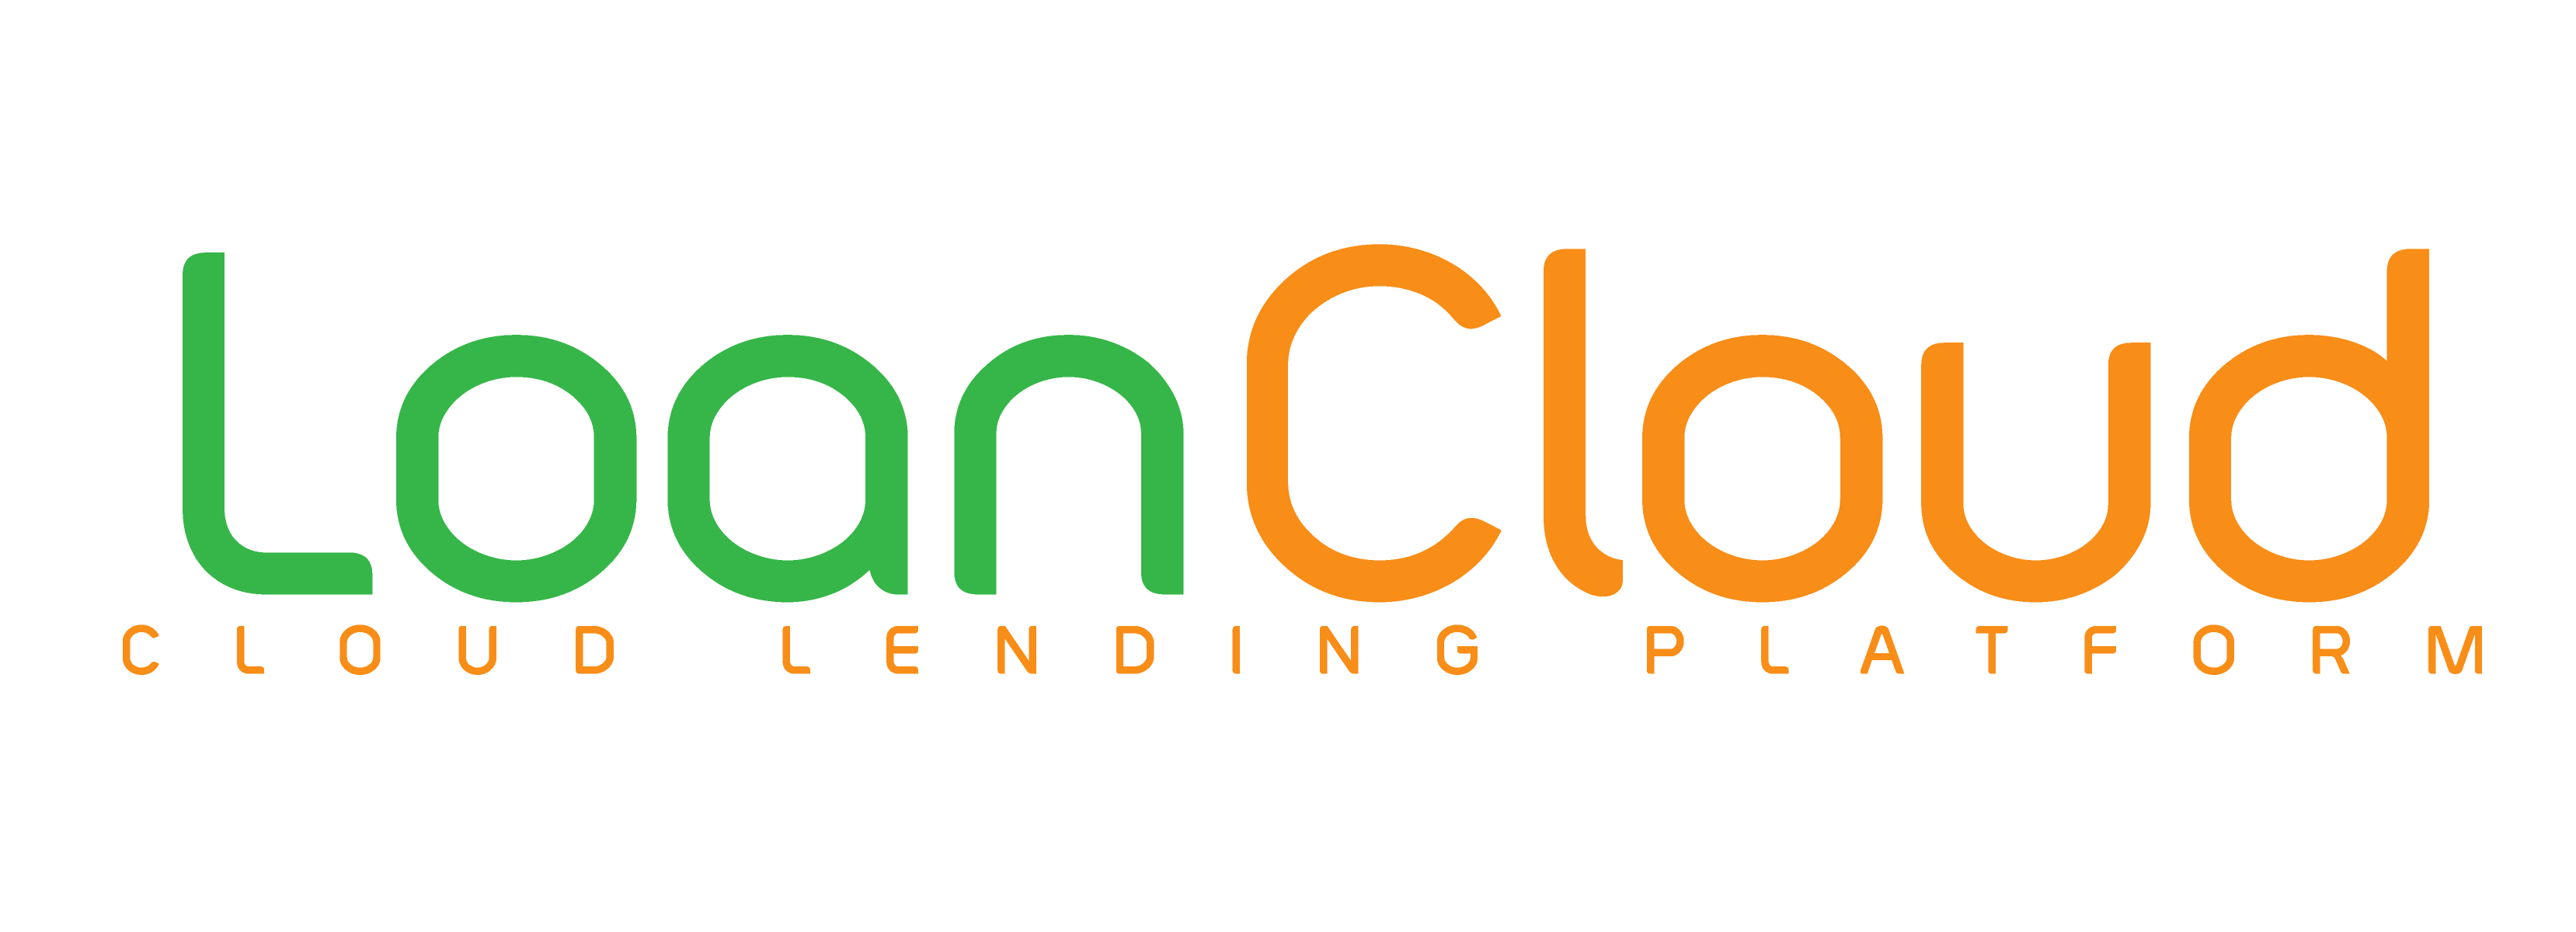 Cloud Lending Platform